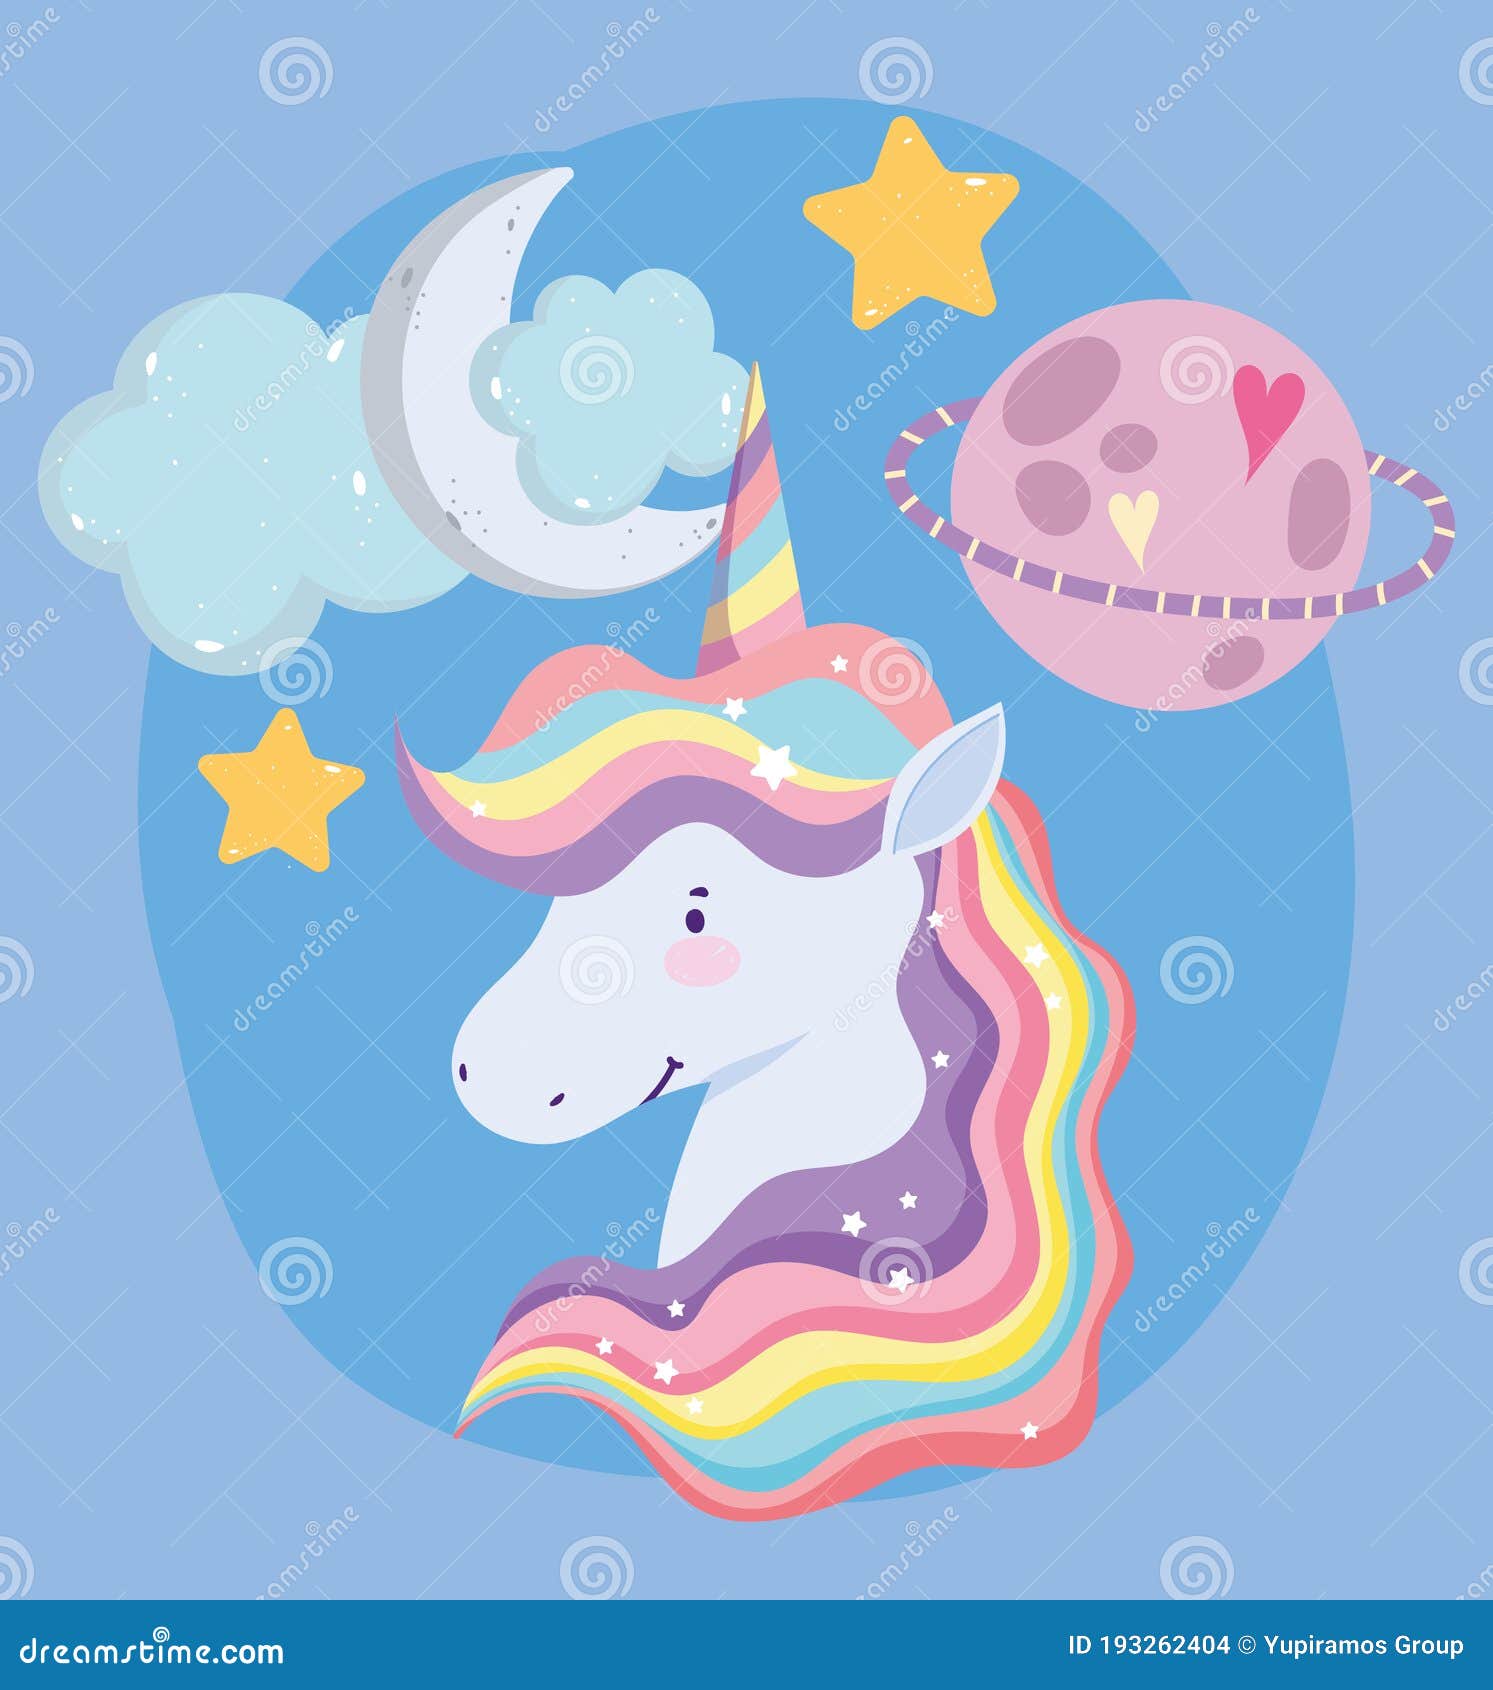 Unicorn Cartoon Fantasy Planet Cloud Moon Stars Dream Stock Vector -  Illustration of cute, lovely: 193262404